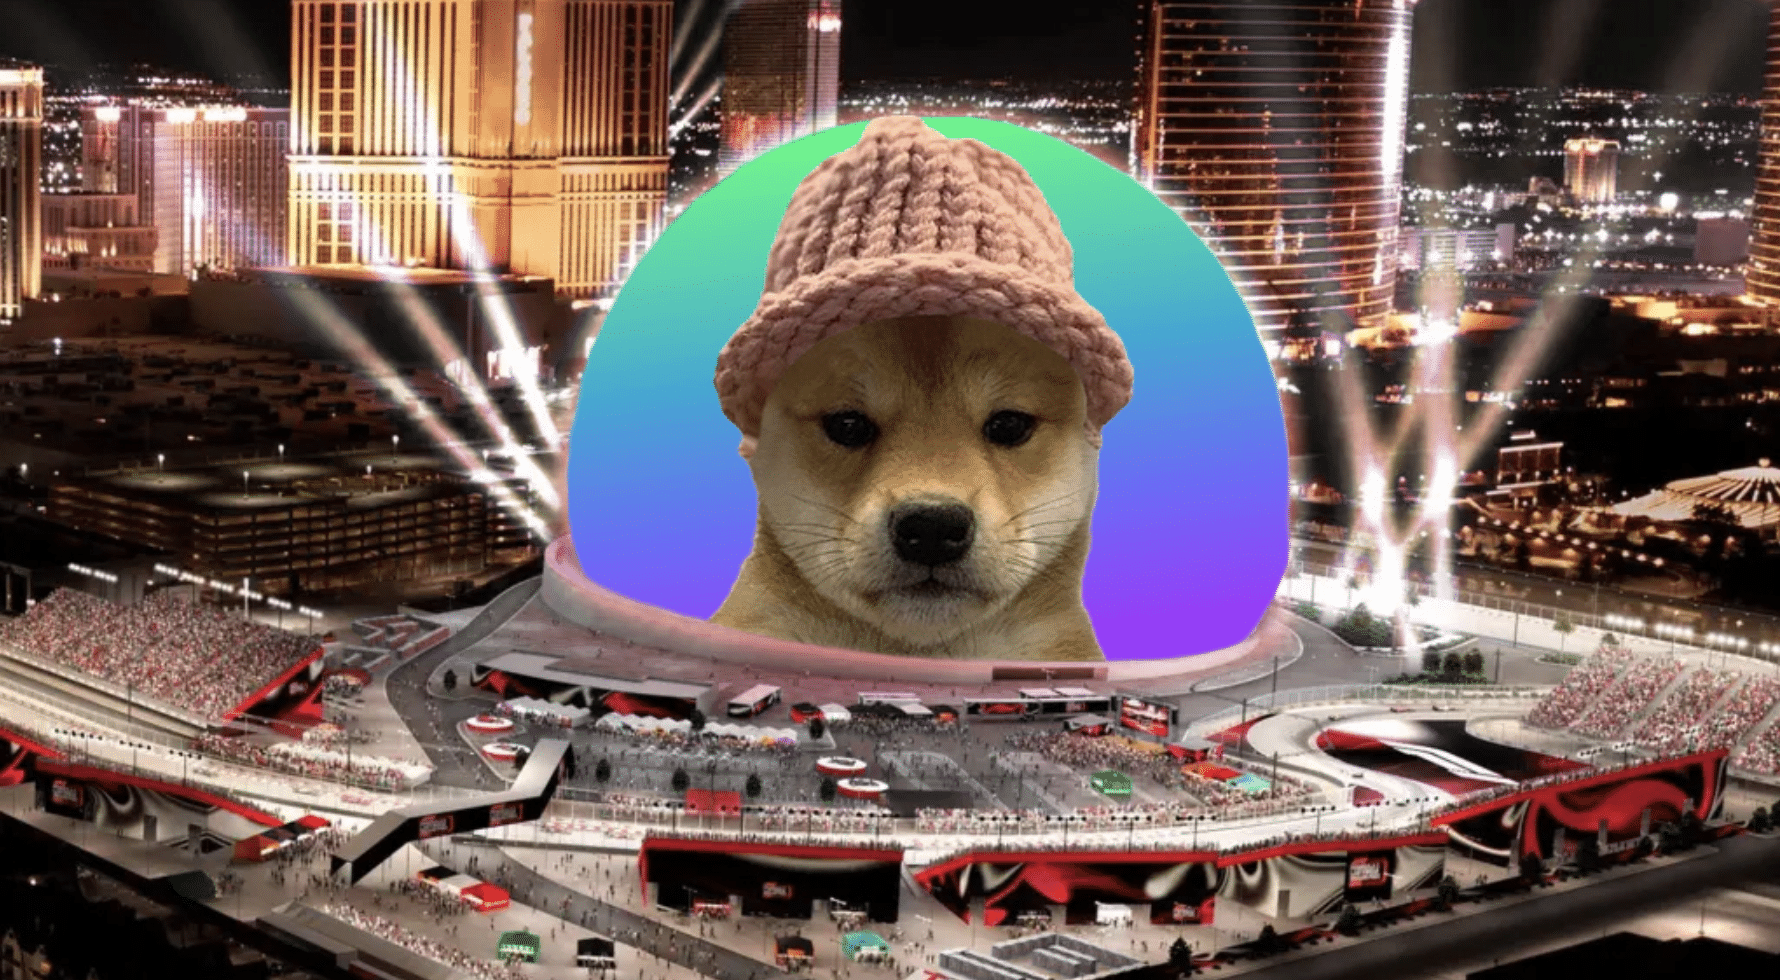 Entusiastas da criptografia arrecadam quase US$ 690,000 para colocar Dogwifhat Meme na esfera de Las Vegas - Unchained